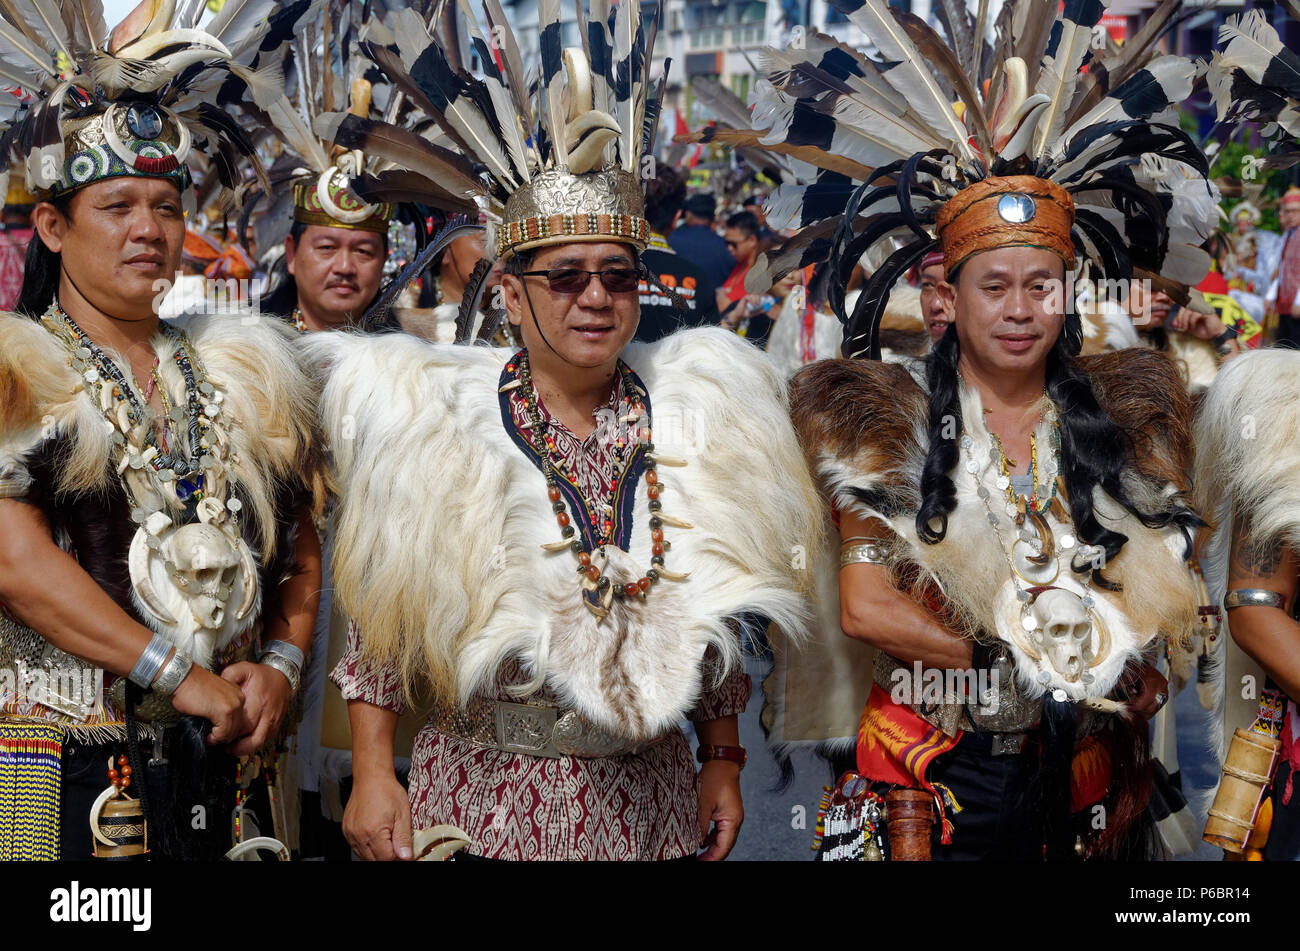 Iban man in traditional dress, Gawai festival, Kuching, Borneo, Sarawak, Malaysia with hornbill headdress Stock Photo